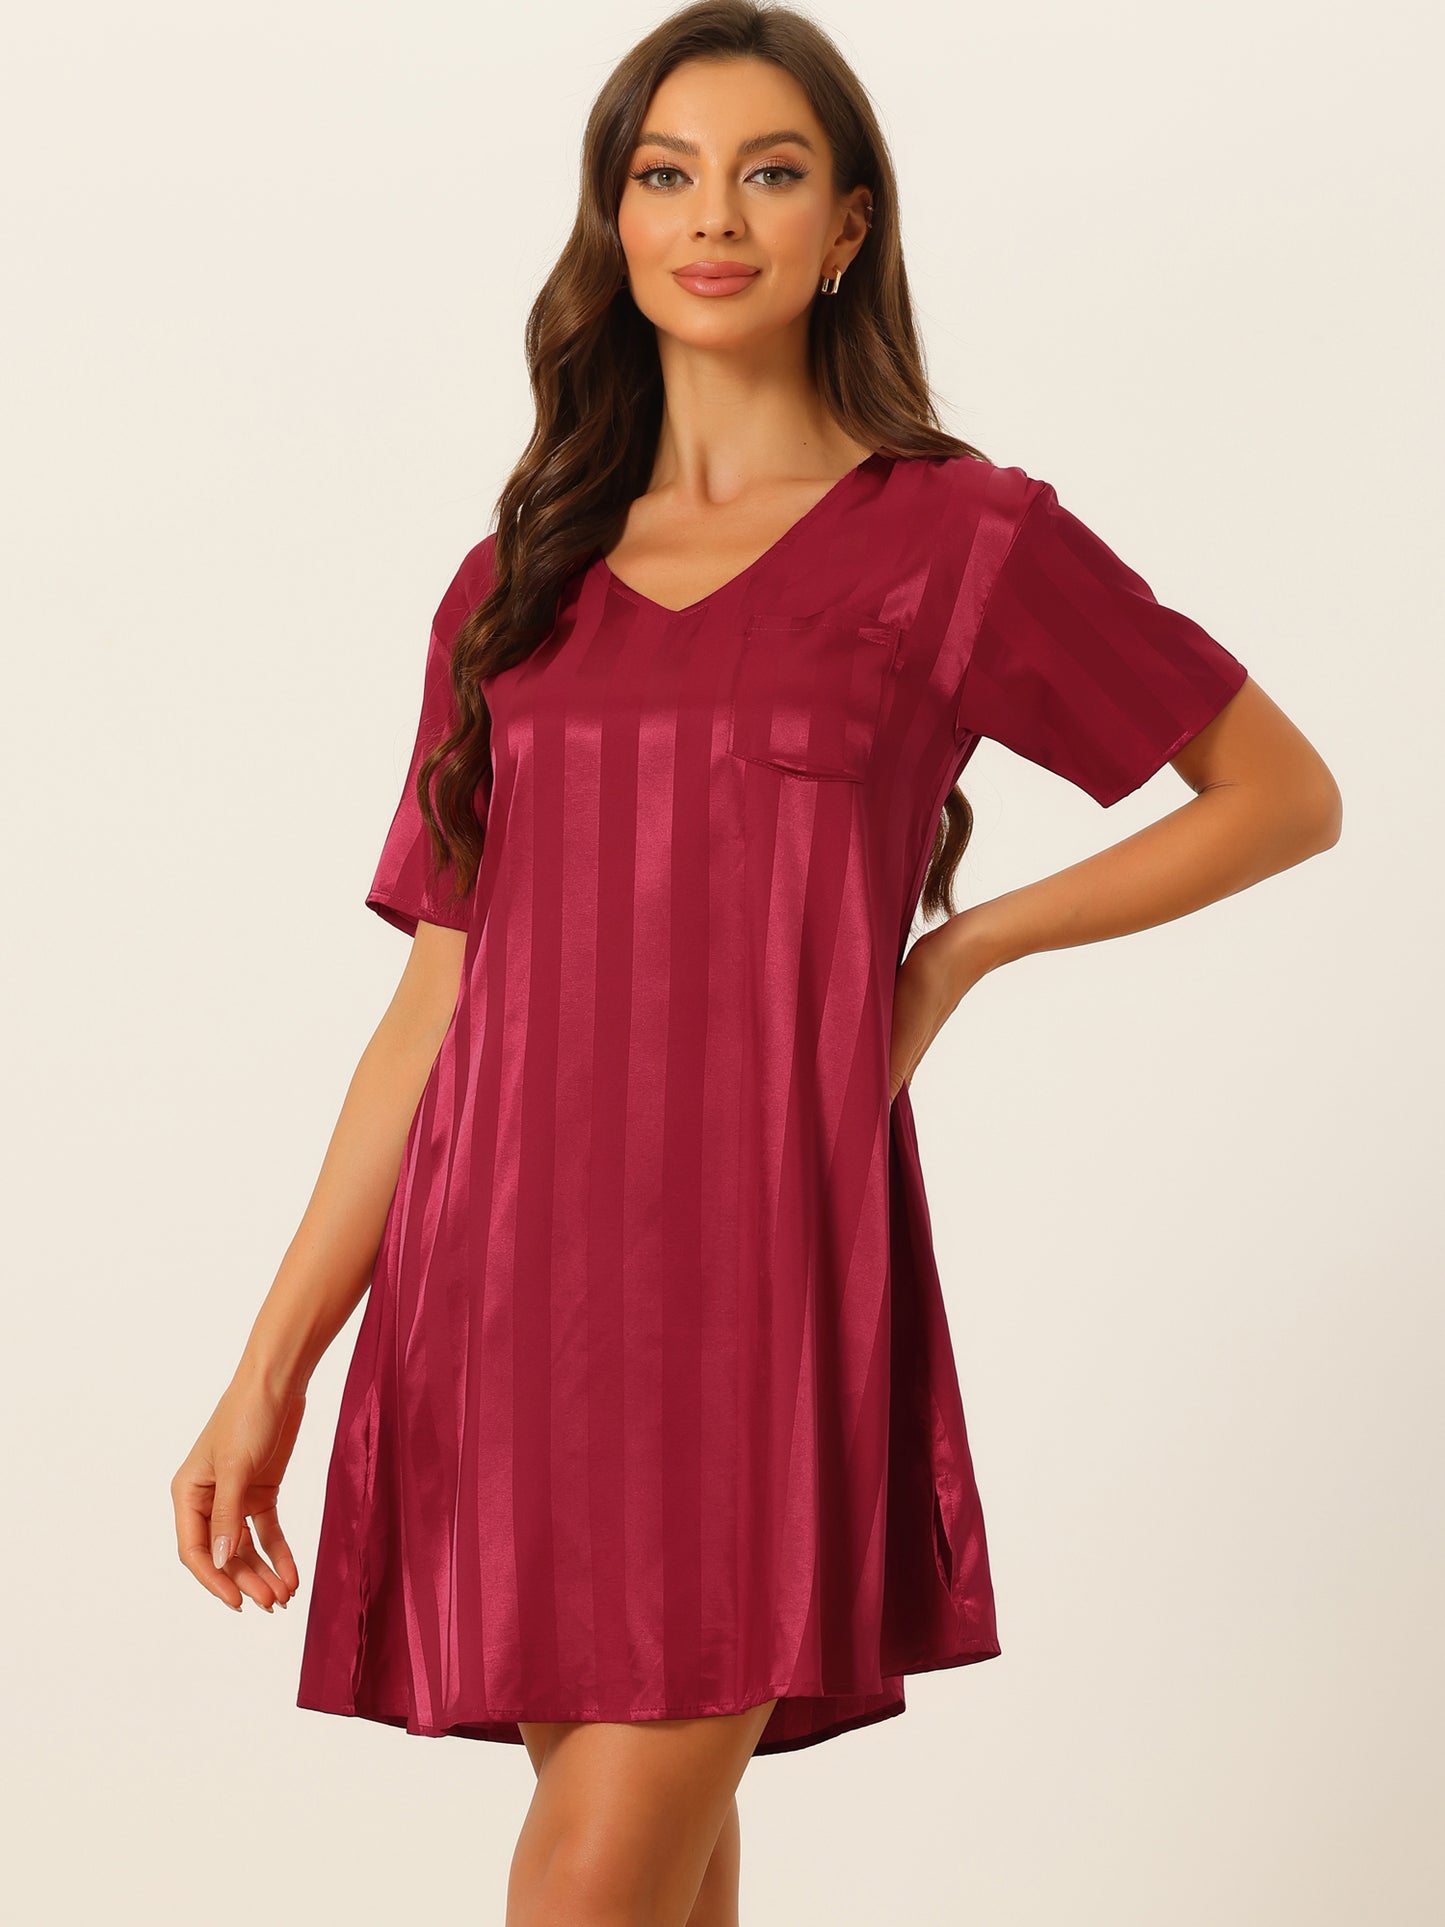 cheibear Pajamas Satin Dress Nightshirt Short Sleeves Lounge Sleepwear Nightgown Wine Red